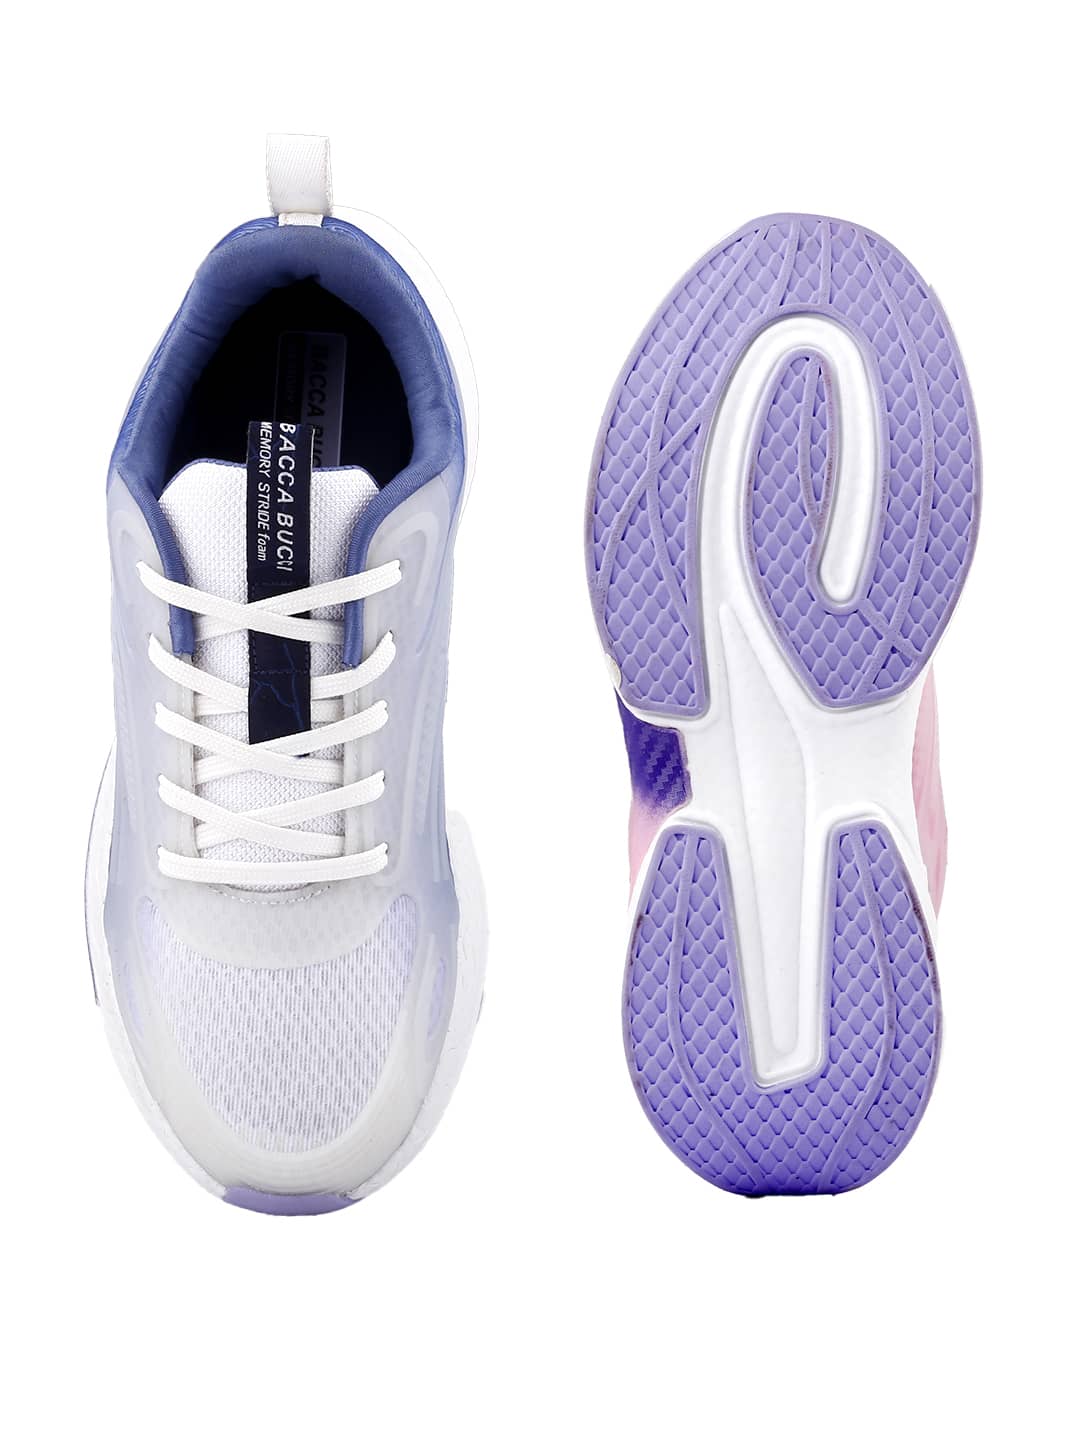 Bacca Bucci Luminara Women's Lightweight Running Shoes with Glow-in-the-Dark Feature